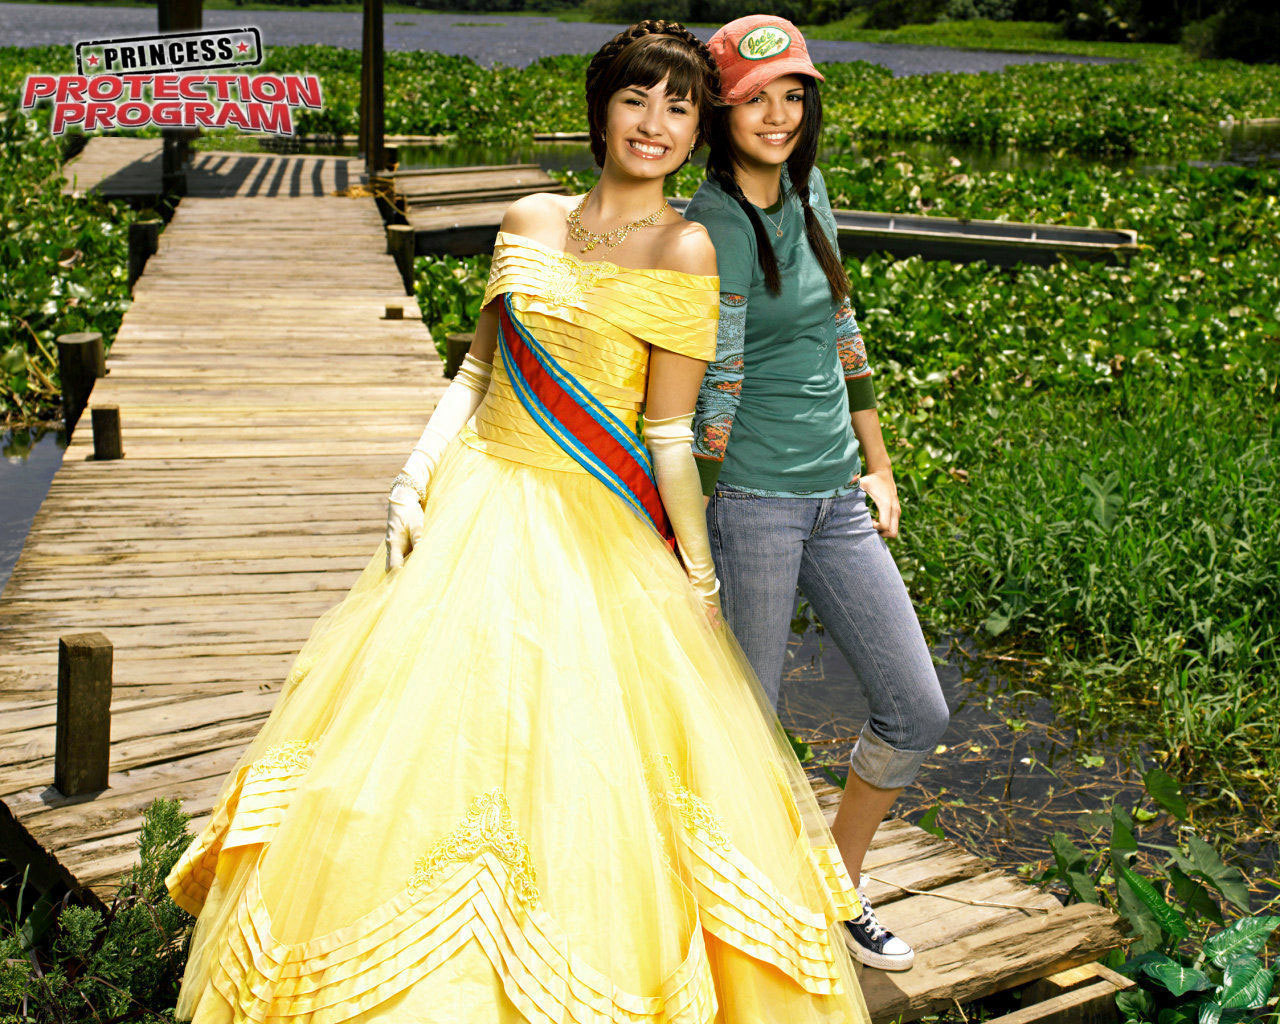 princess protection program - Disney Channel Girls Photo (11375904) - Fanpop1280 x 1024